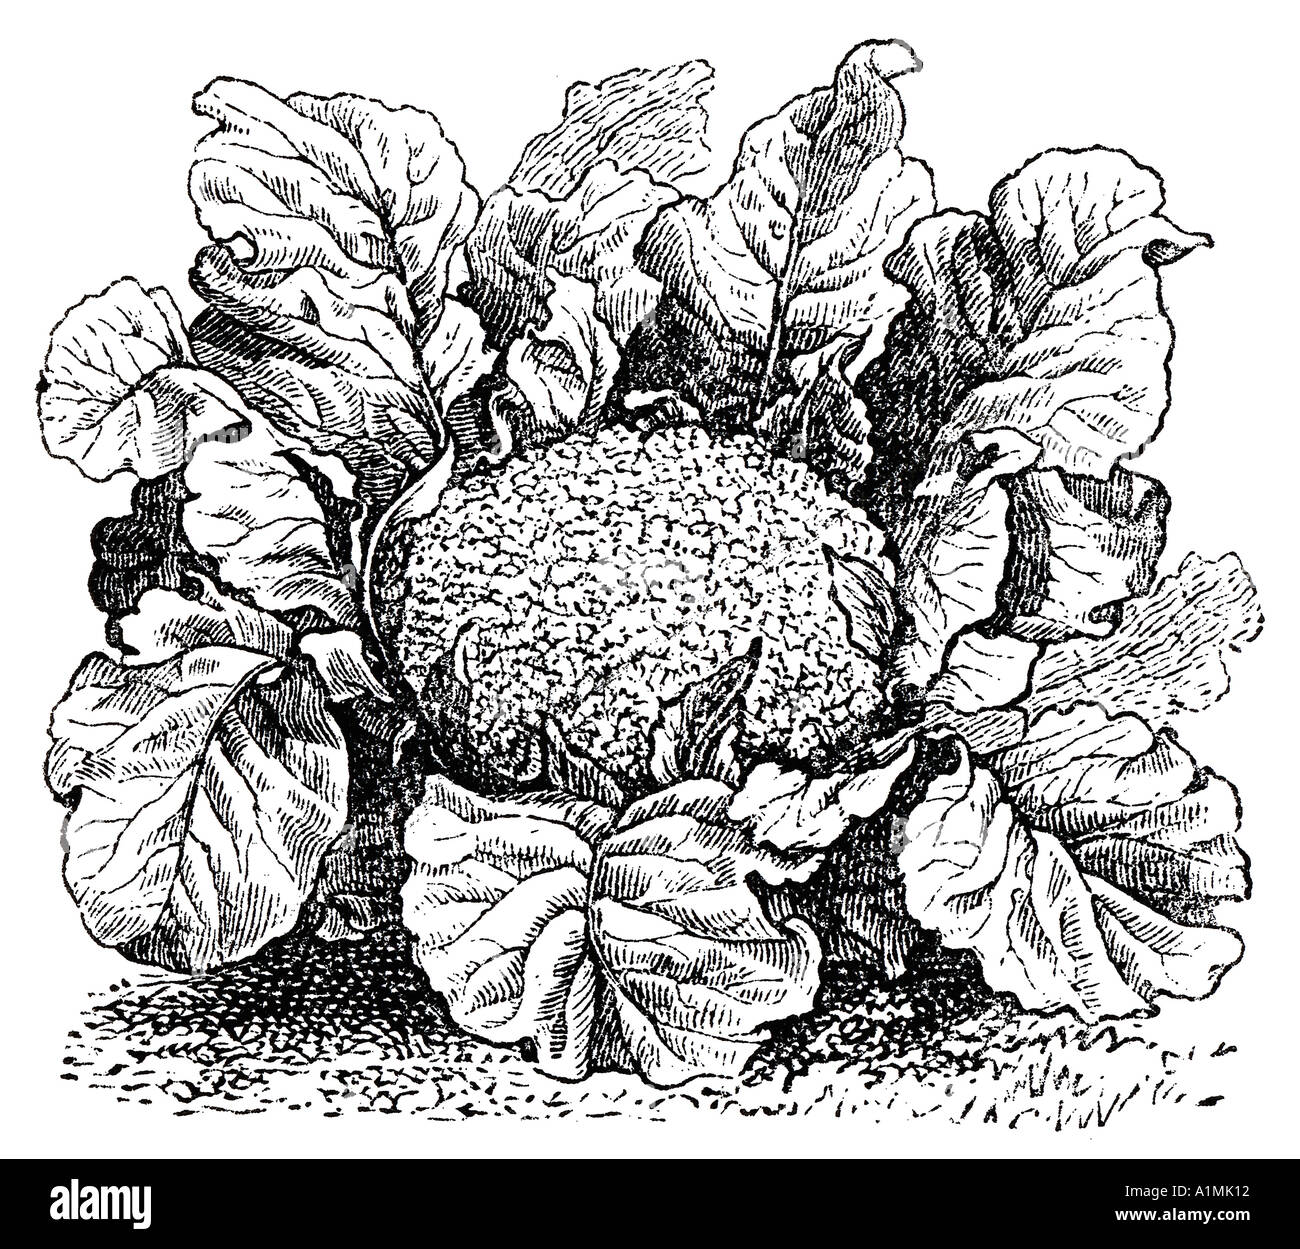 Cauliflower illustration Stock Photo